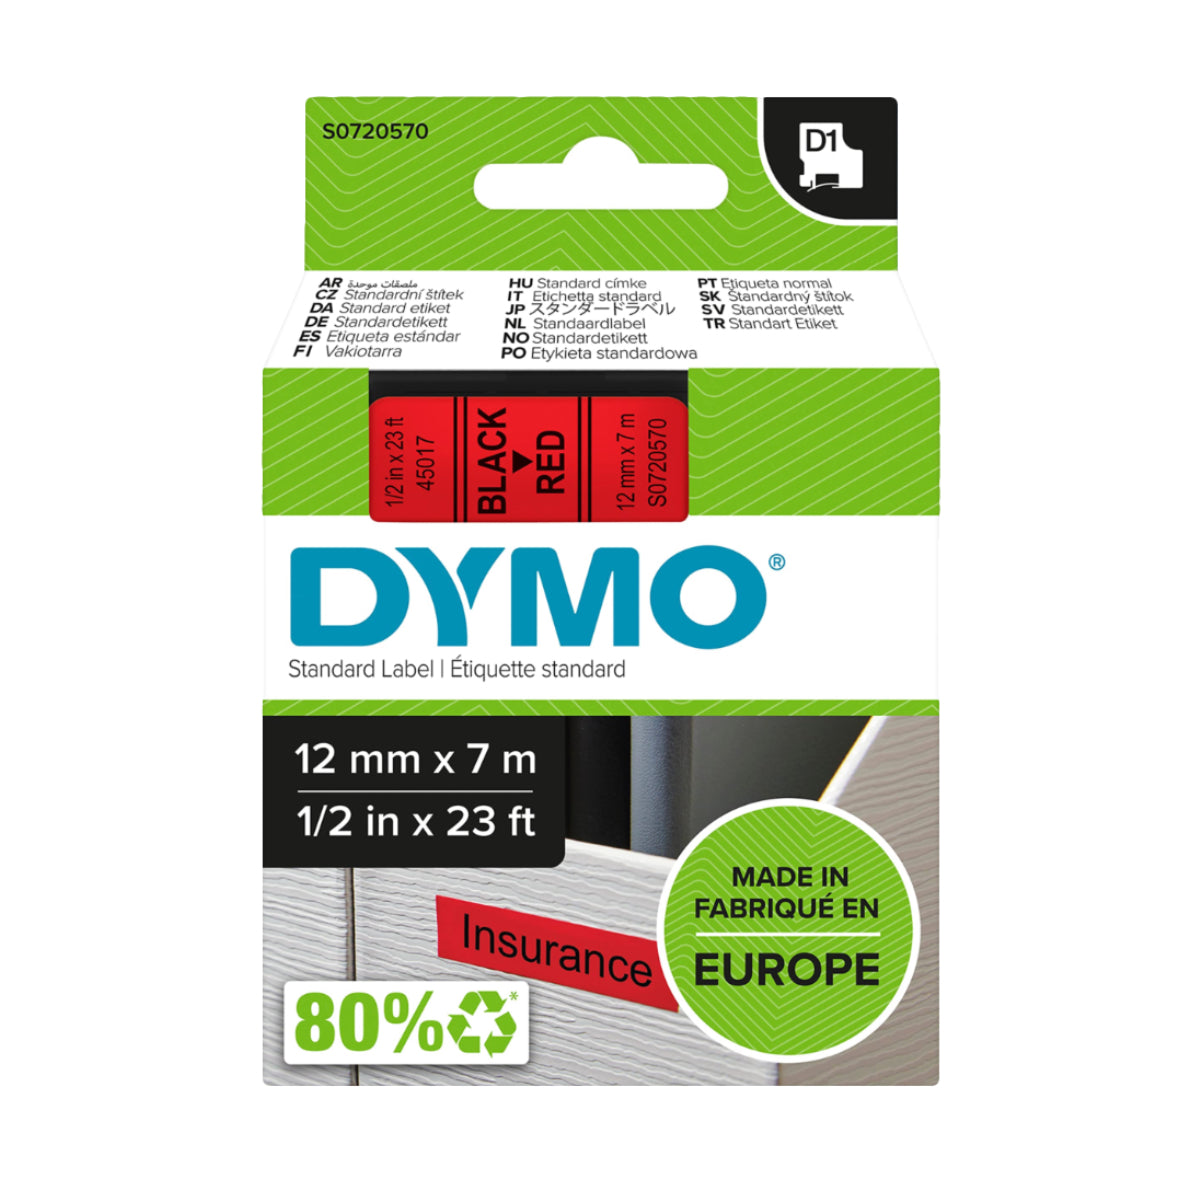 Dymo D1 Label Cassette, 12 mm x 7 m, Black on Red - 45017